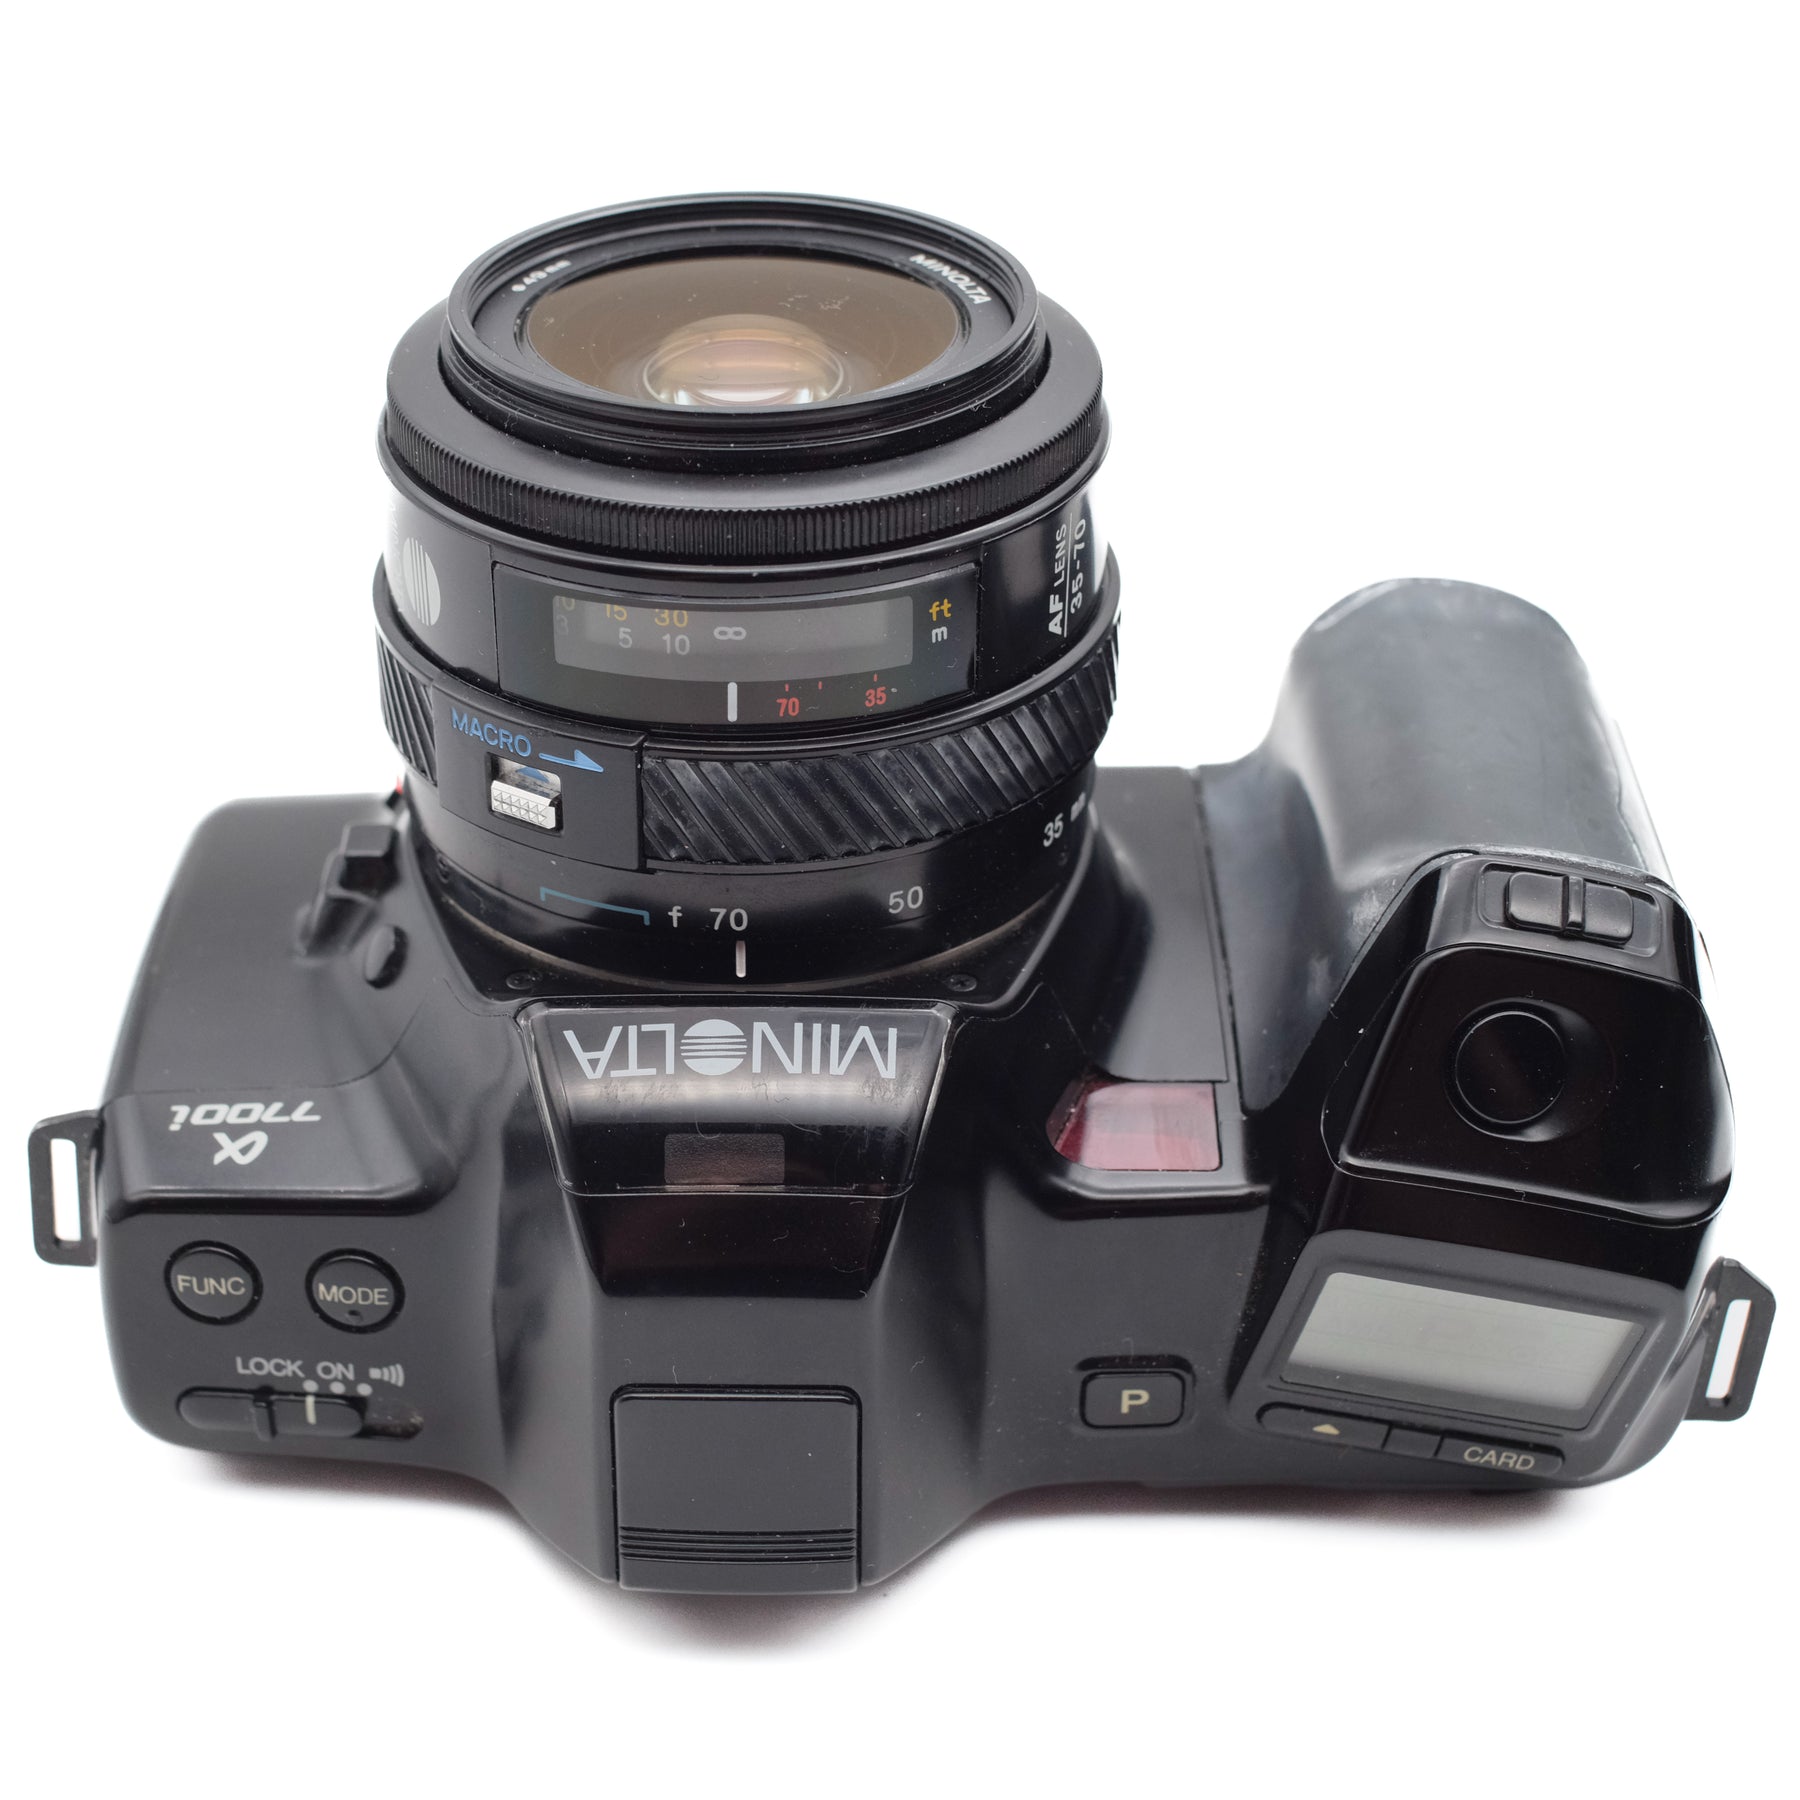 Minolta α-7700i 35mm SLR Camera Set (Minolta AF 35 - 70mm f/4 Lens